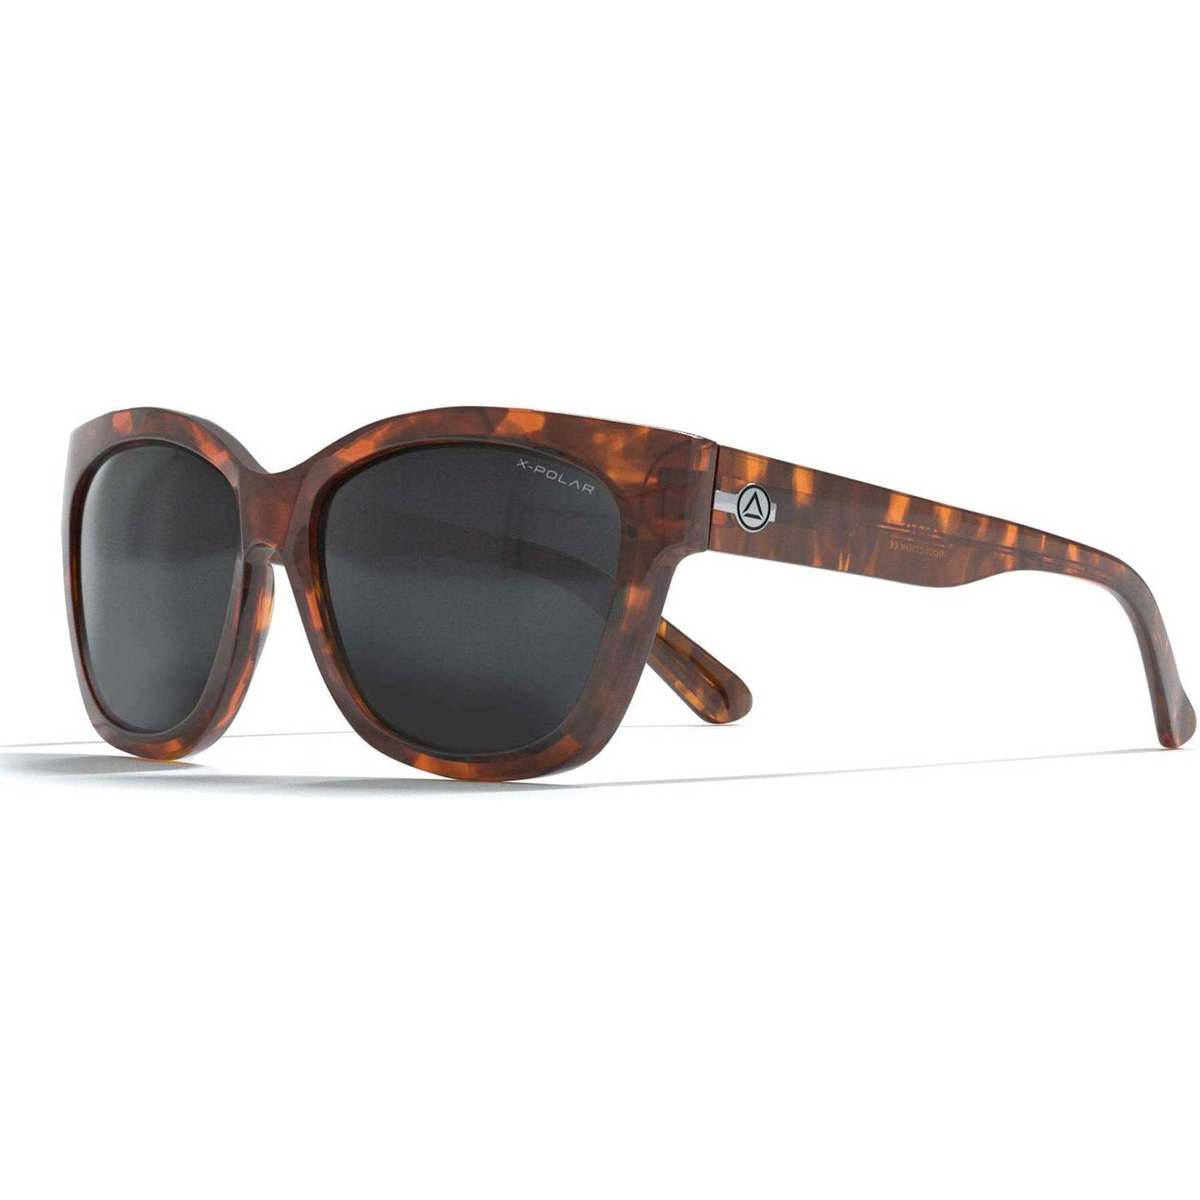 Hodinky & Bižutéria Slnečné okuliare Uller Redwood Hnedá